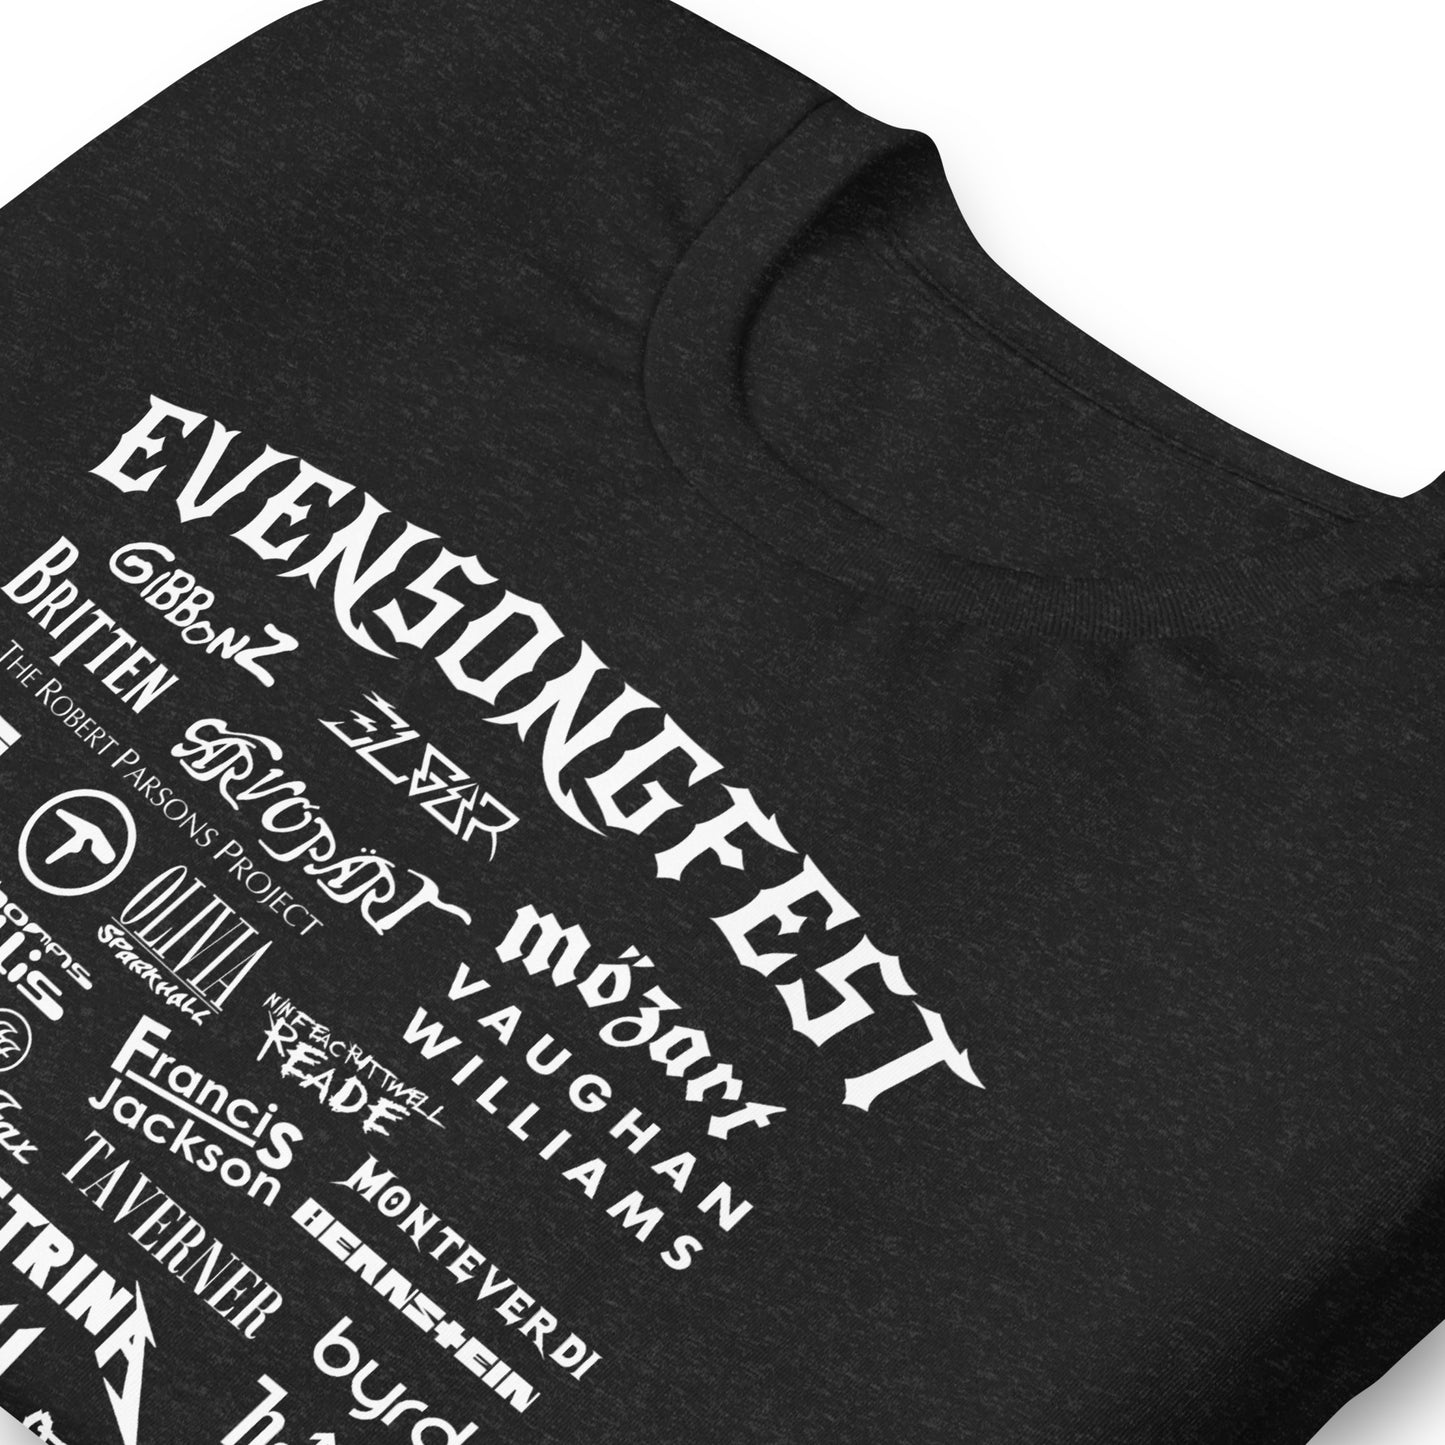 EVENSONGFEST (new!) Unisex T-shirt